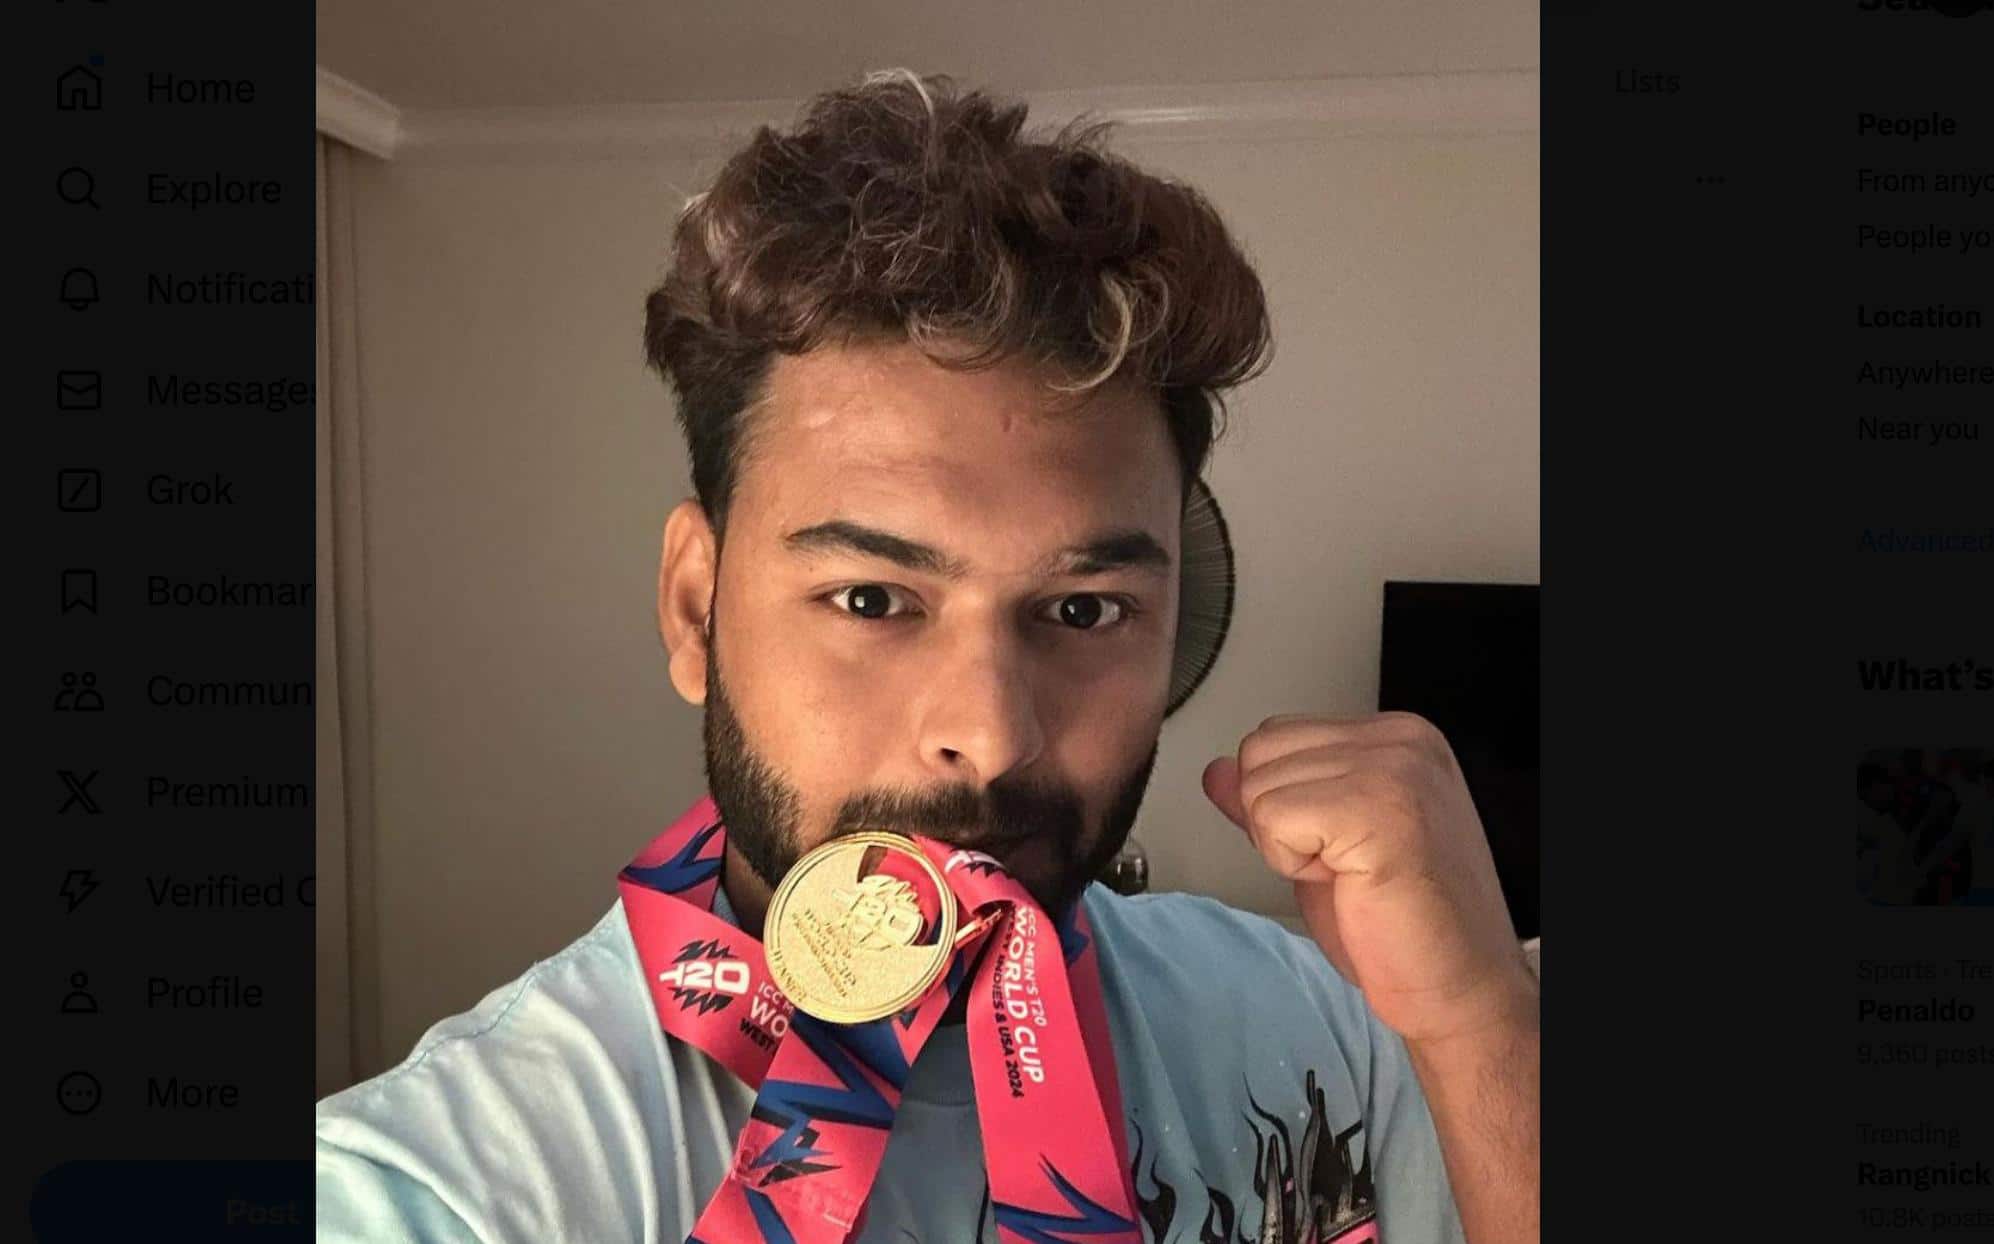 Rishabh Pant biting his winning medal [X]
